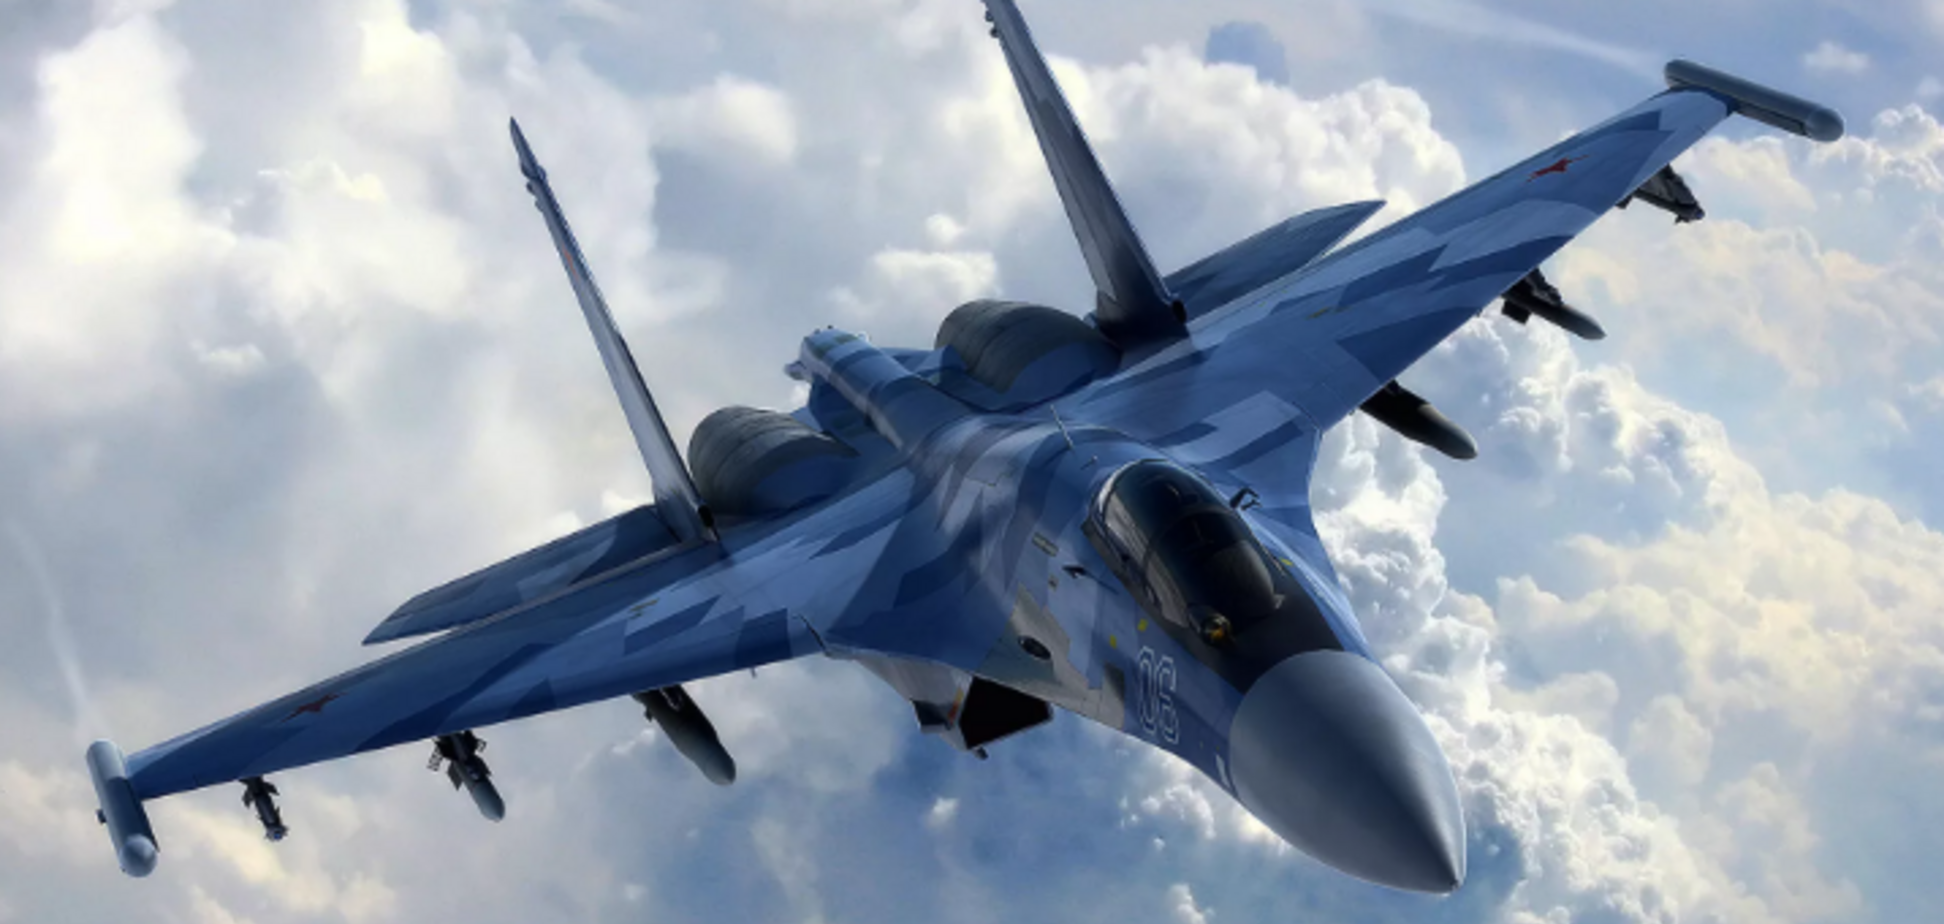 Истребители Путина и НАТО 'сцепились' в небе: детали опасного инцидента